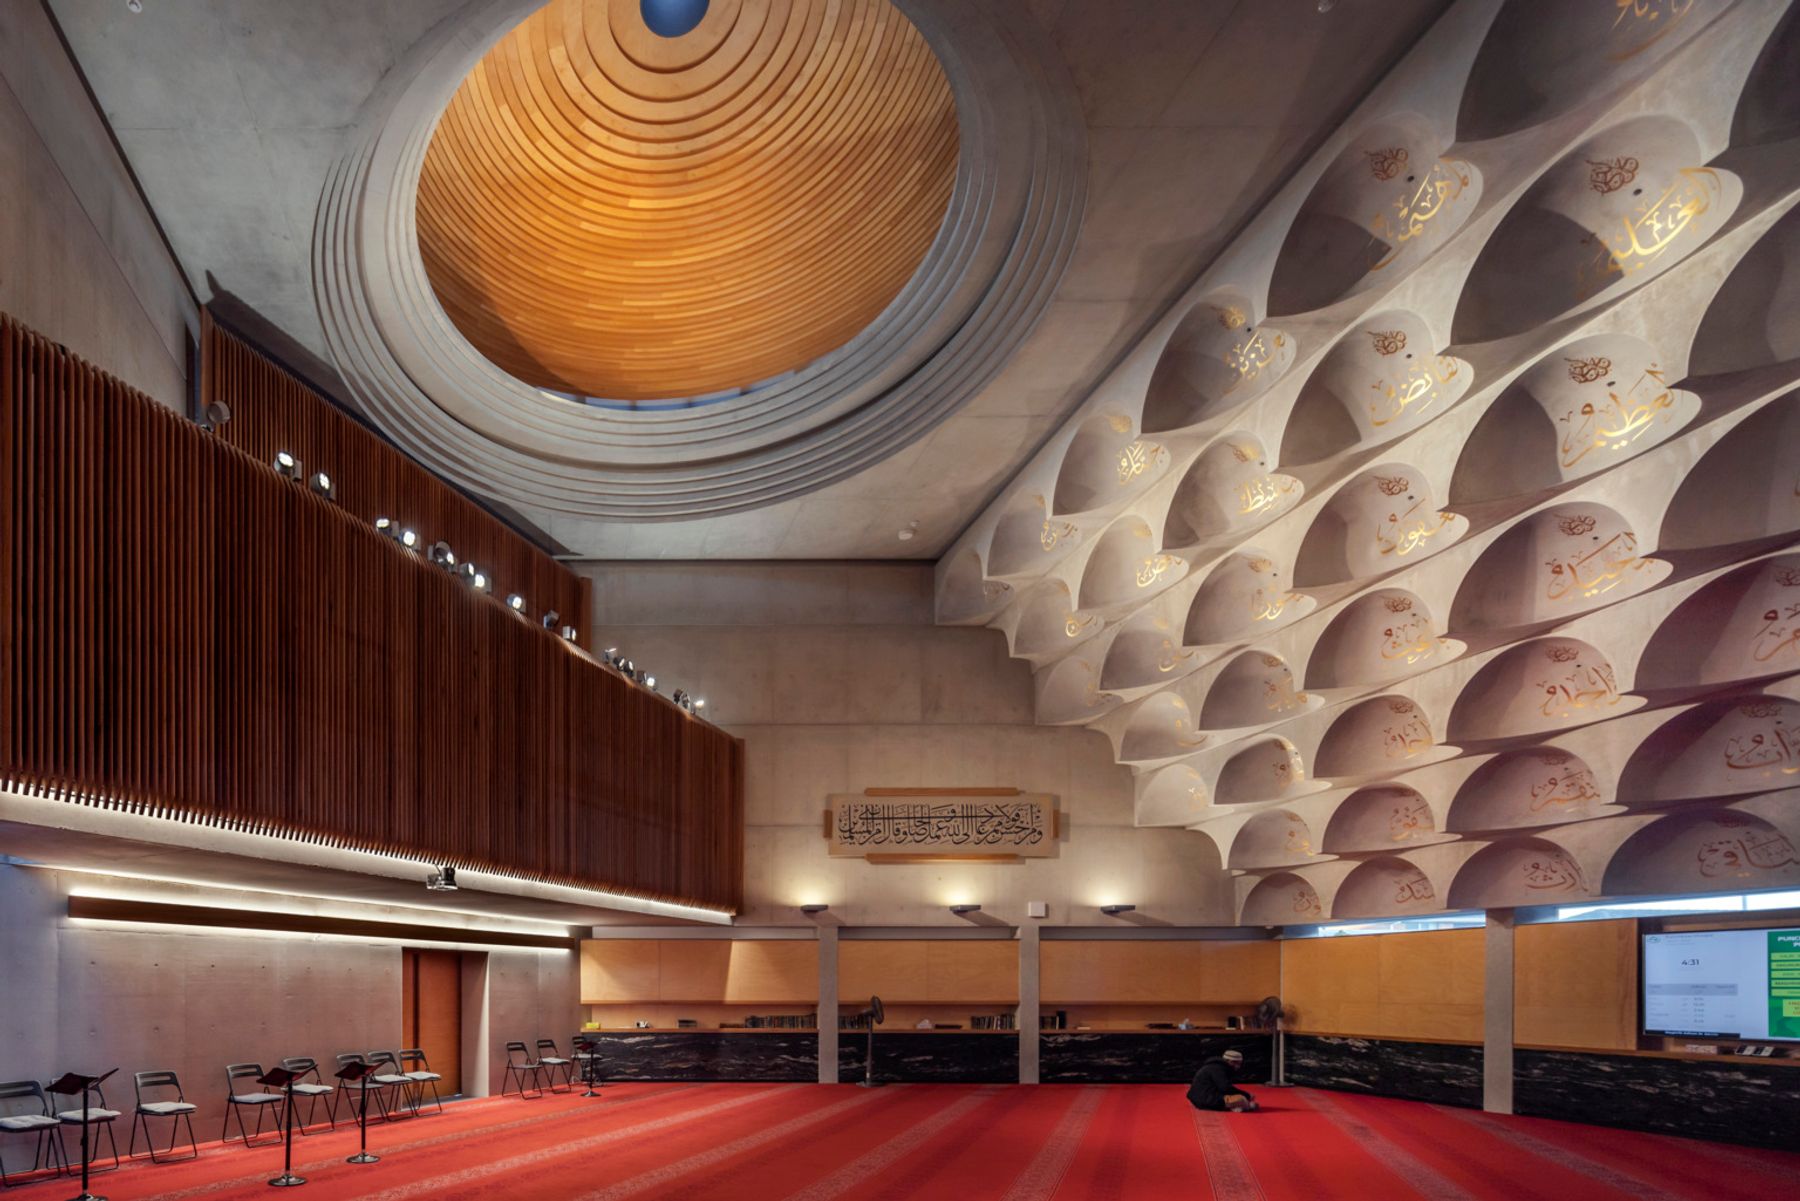 Moschea Punchbowl, Sydney. Architettura: Candalepas Associates, Sydney. Fotografia: Jackie Chan, Sydney.